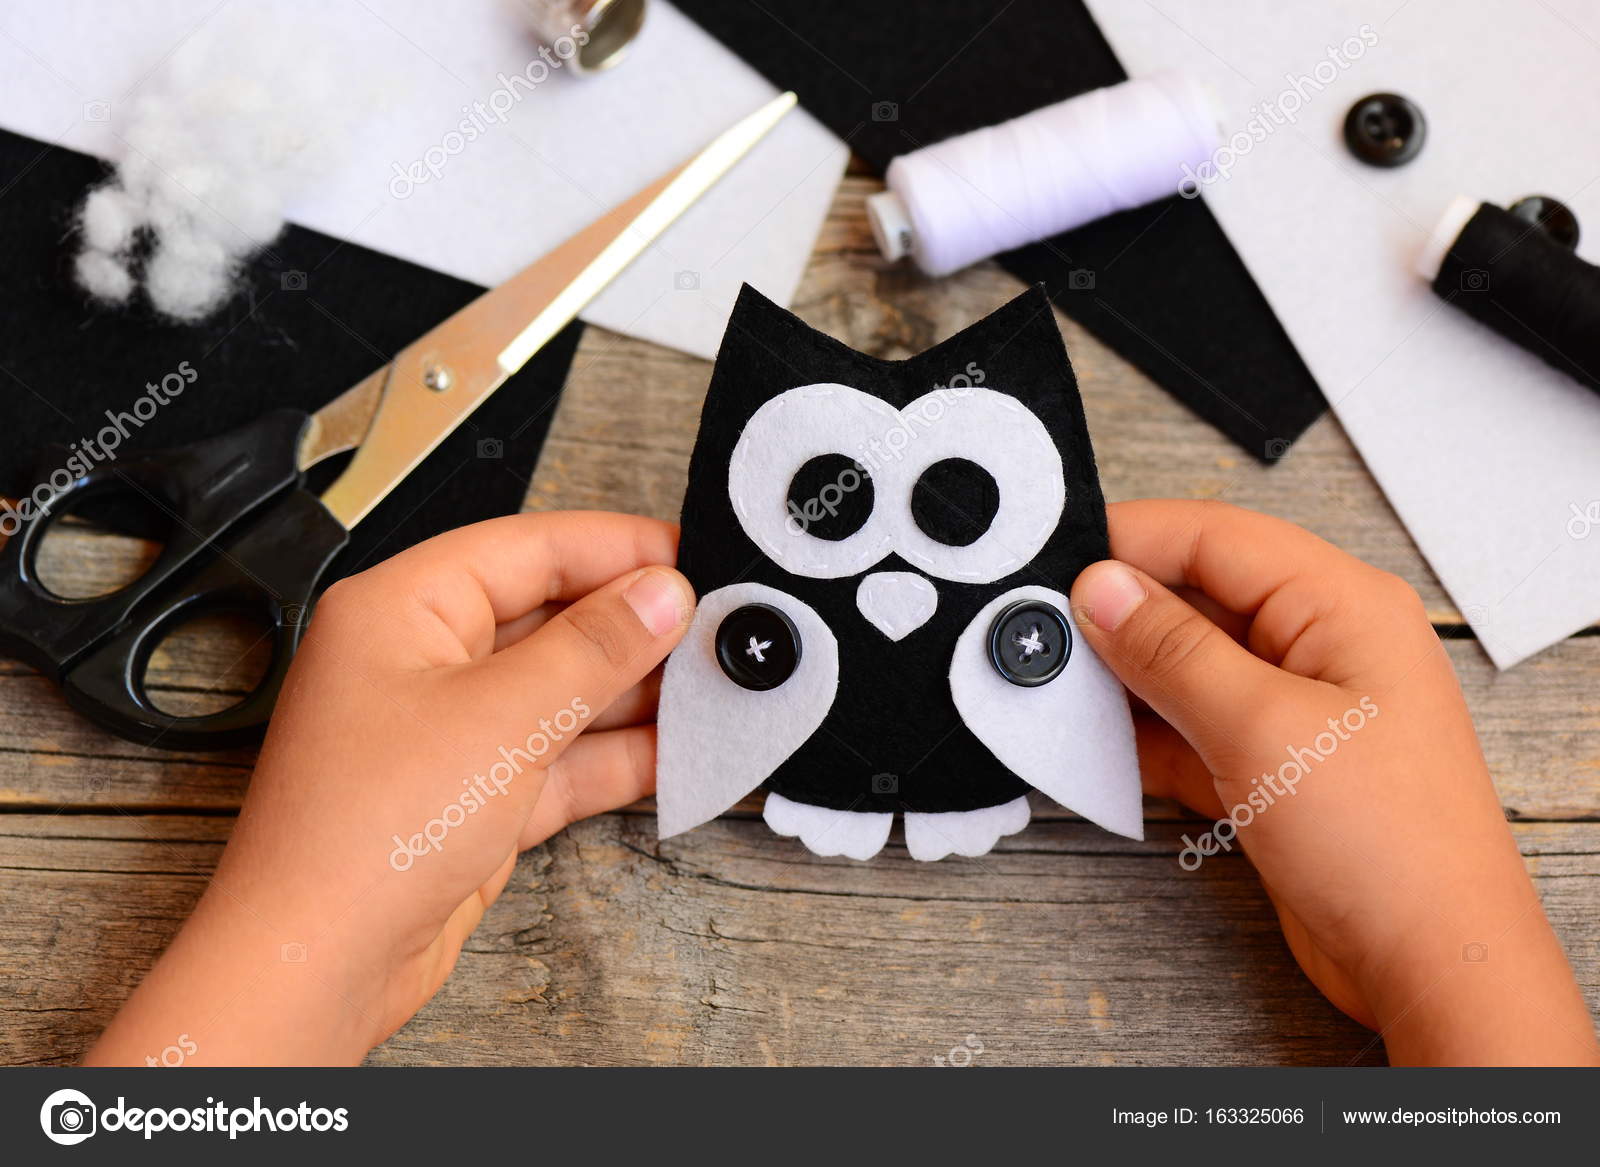 https://st3.depositphotos.com/8416818/16332/i/1600/depositphotos_163325066-stock-photo-child-holds-a-felt-owl.jpg